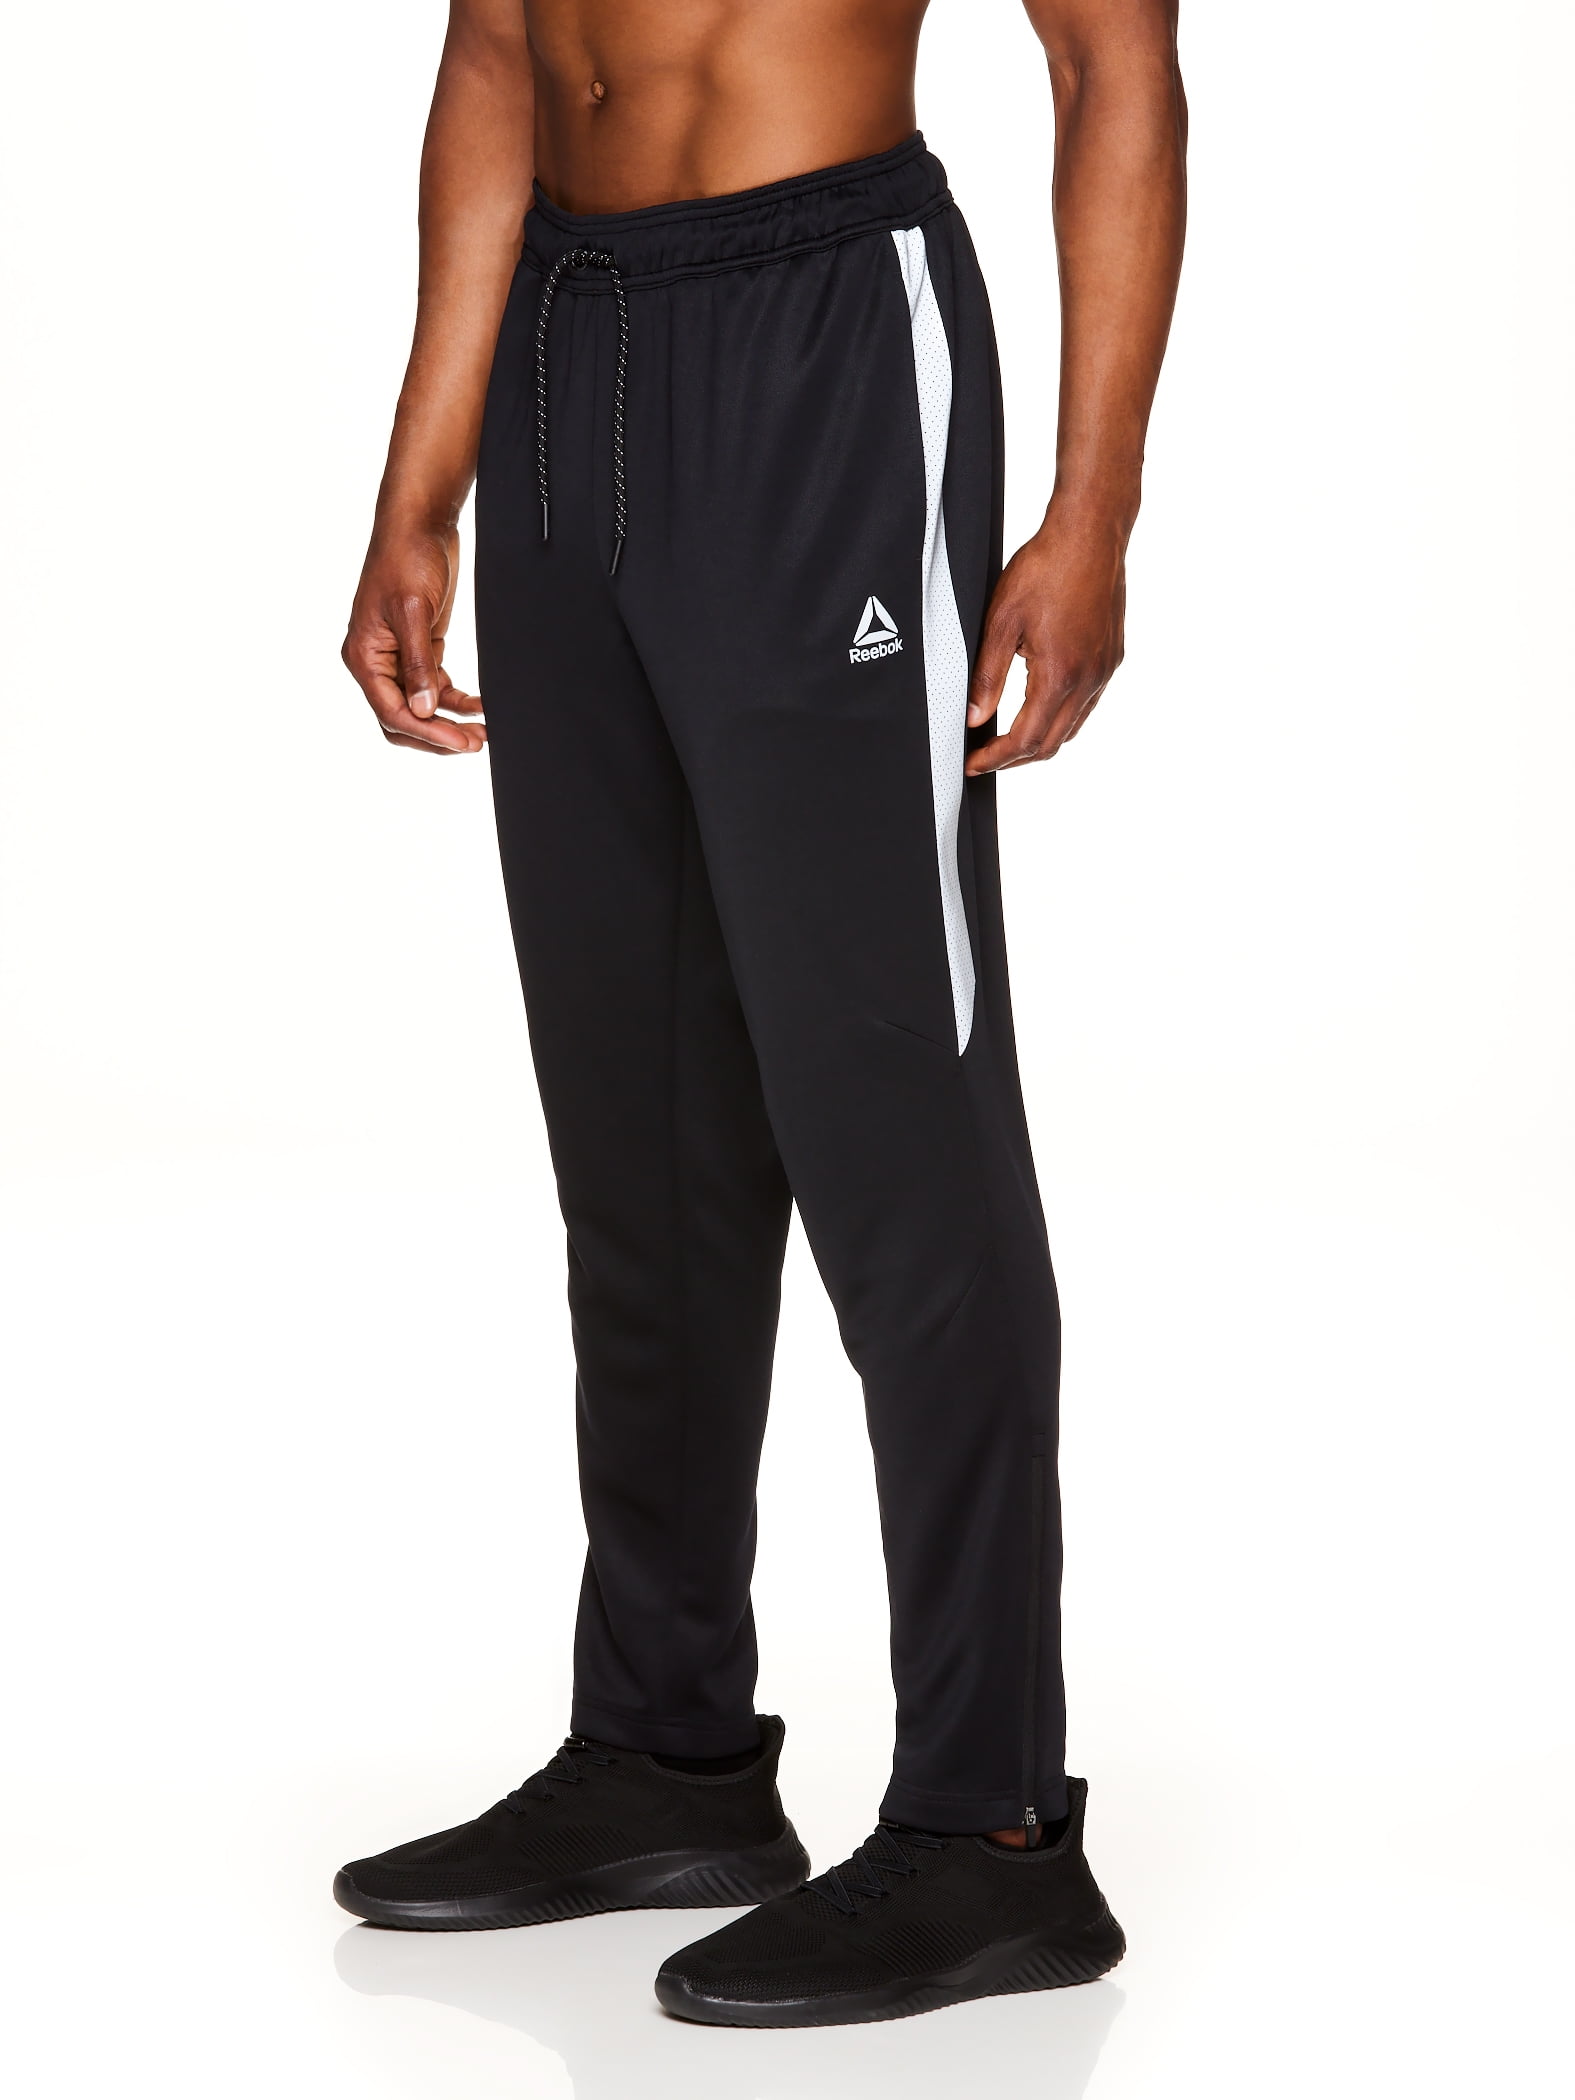 CULTURA SPORT Men's Active Fashion Fleece Jogger Sweatpants W/ Pockets, Athletic  Pants for Gym & Running, Black/Red, Large - Walmart.com